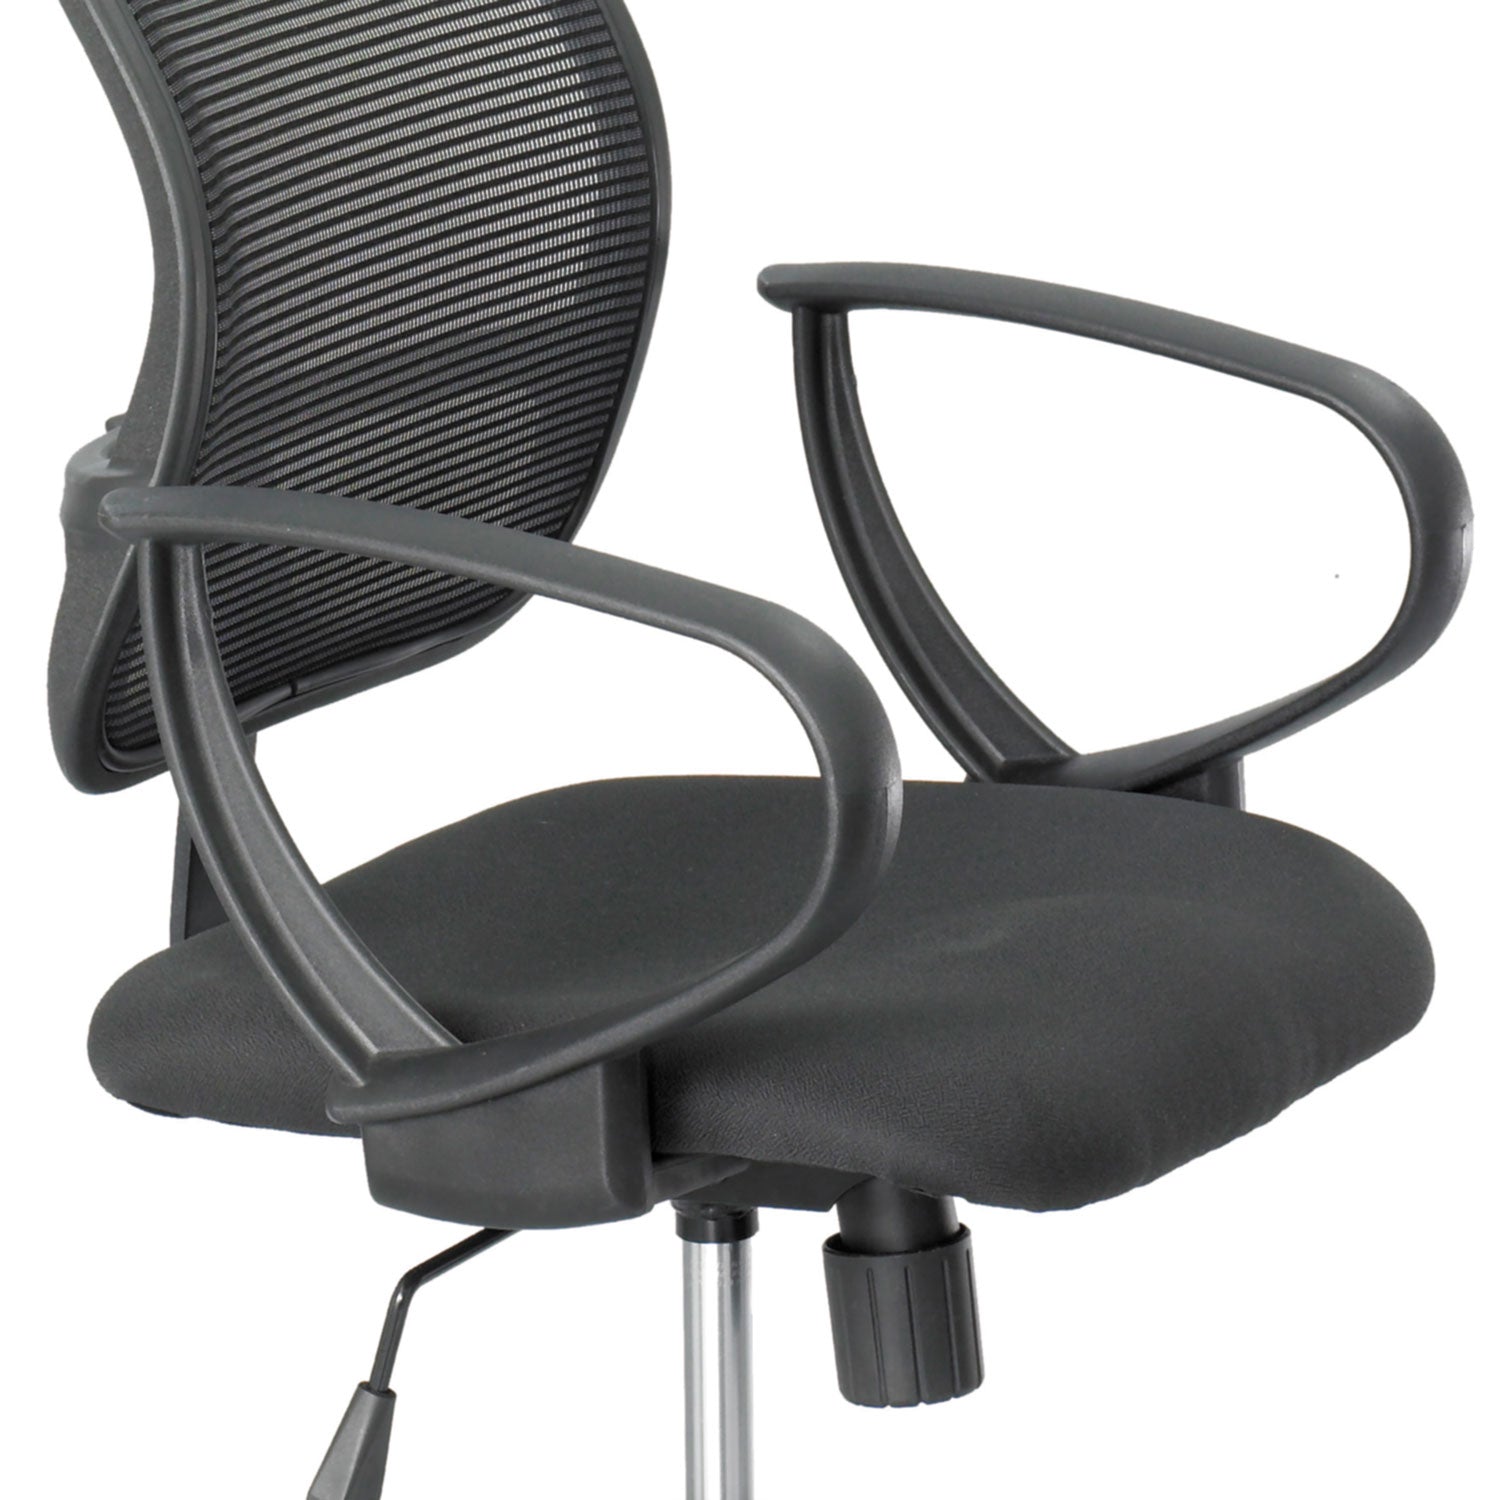 Optional Loop Arm Kit for Mesh Extended Height Chairs for Safco Vue Mesh Extended-Height Chairs, Black, 2/Set - 